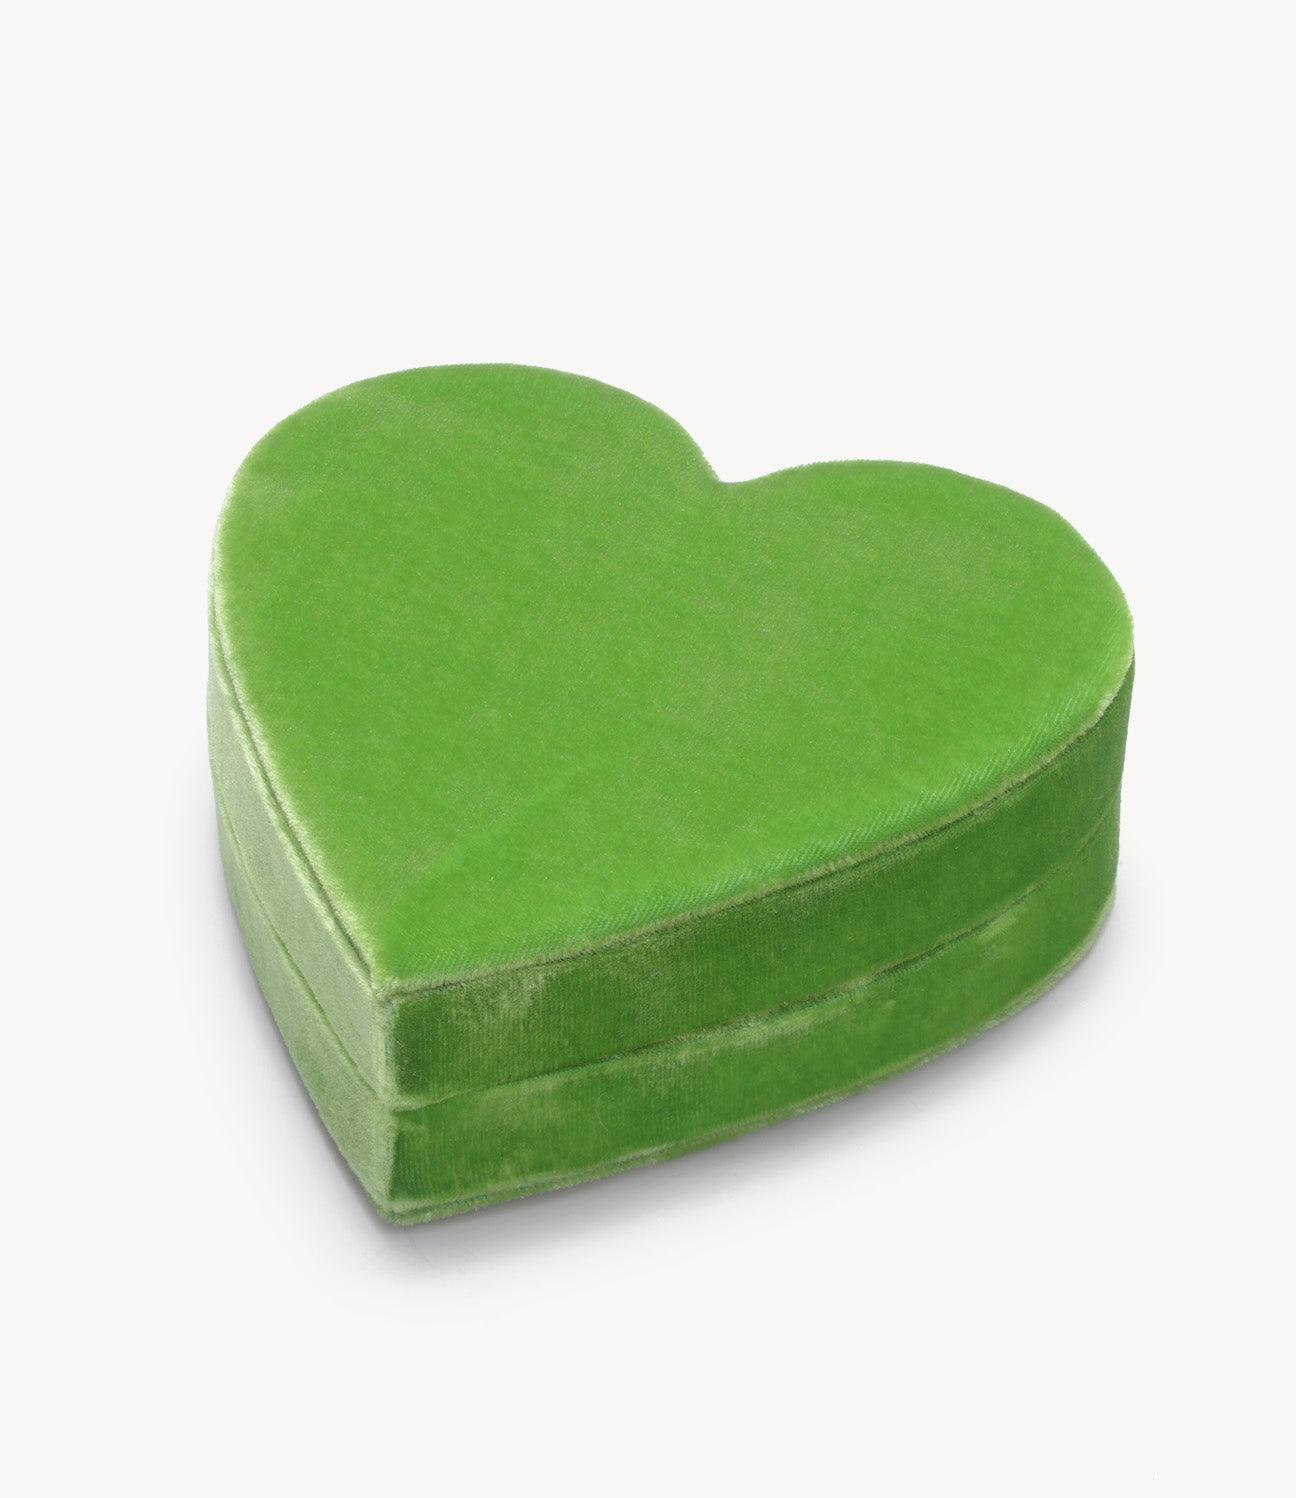 Lime Green, Heart Jewellery Box - Roxanne First